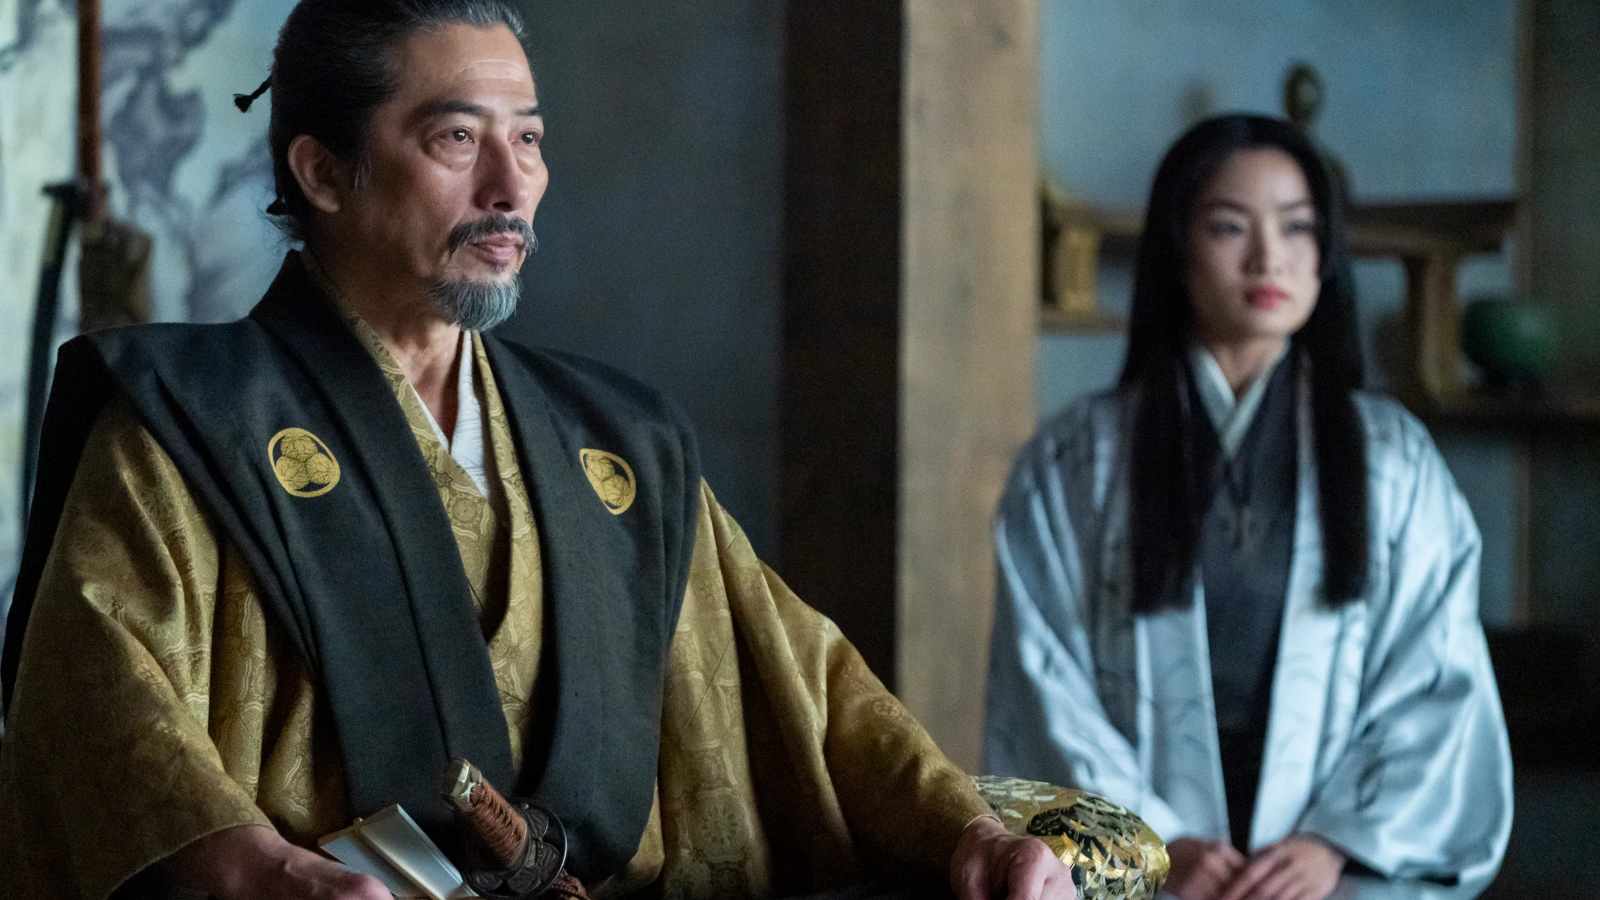 shogun season 2